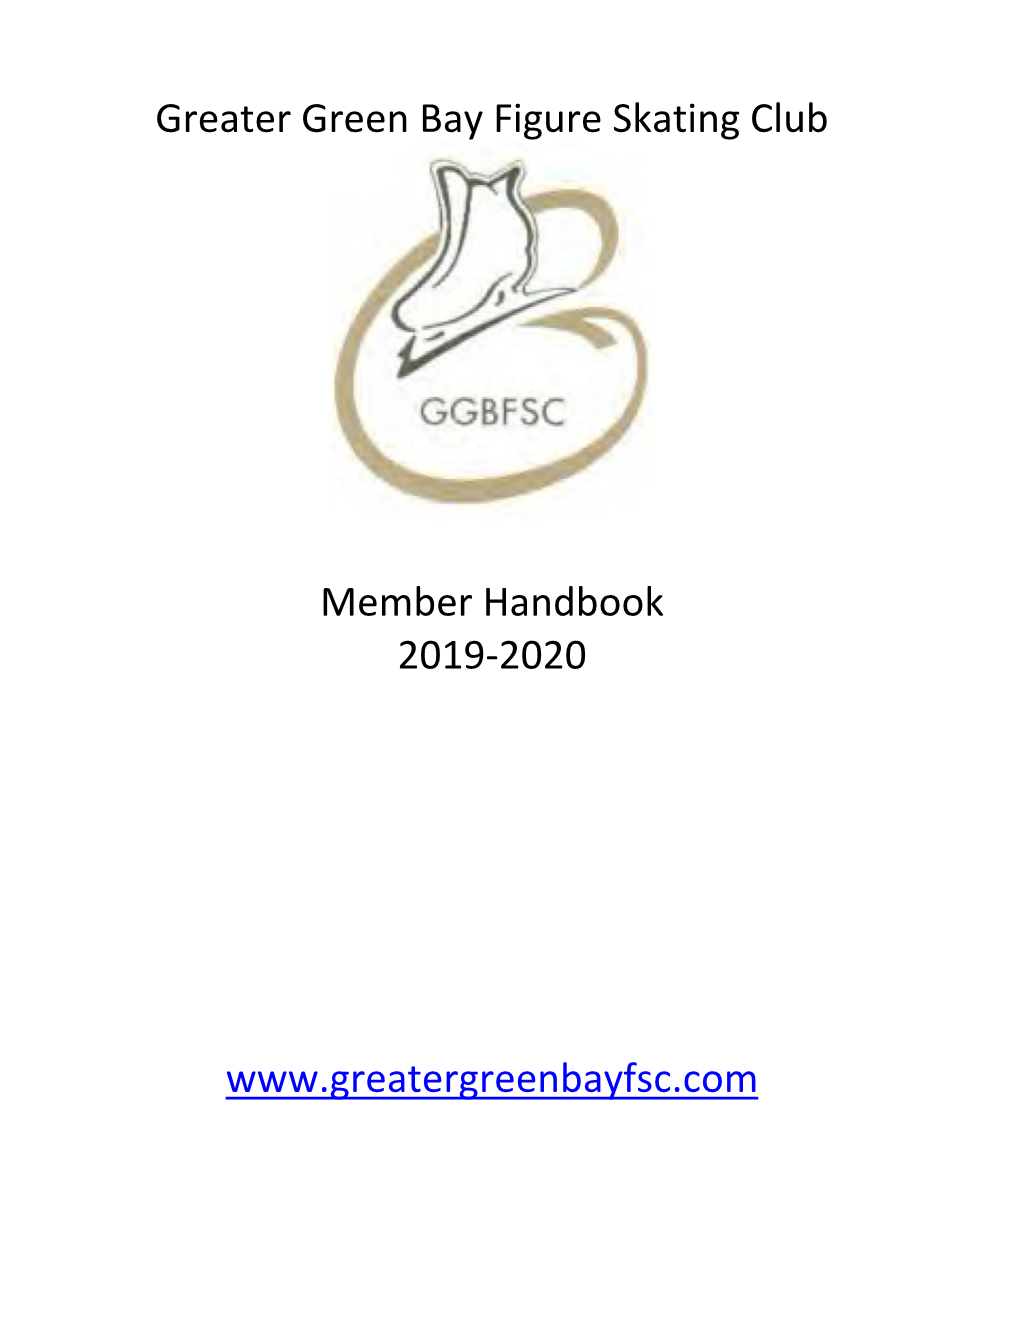 Greater Green Bay Figure Skating Club Member Handbook 2019